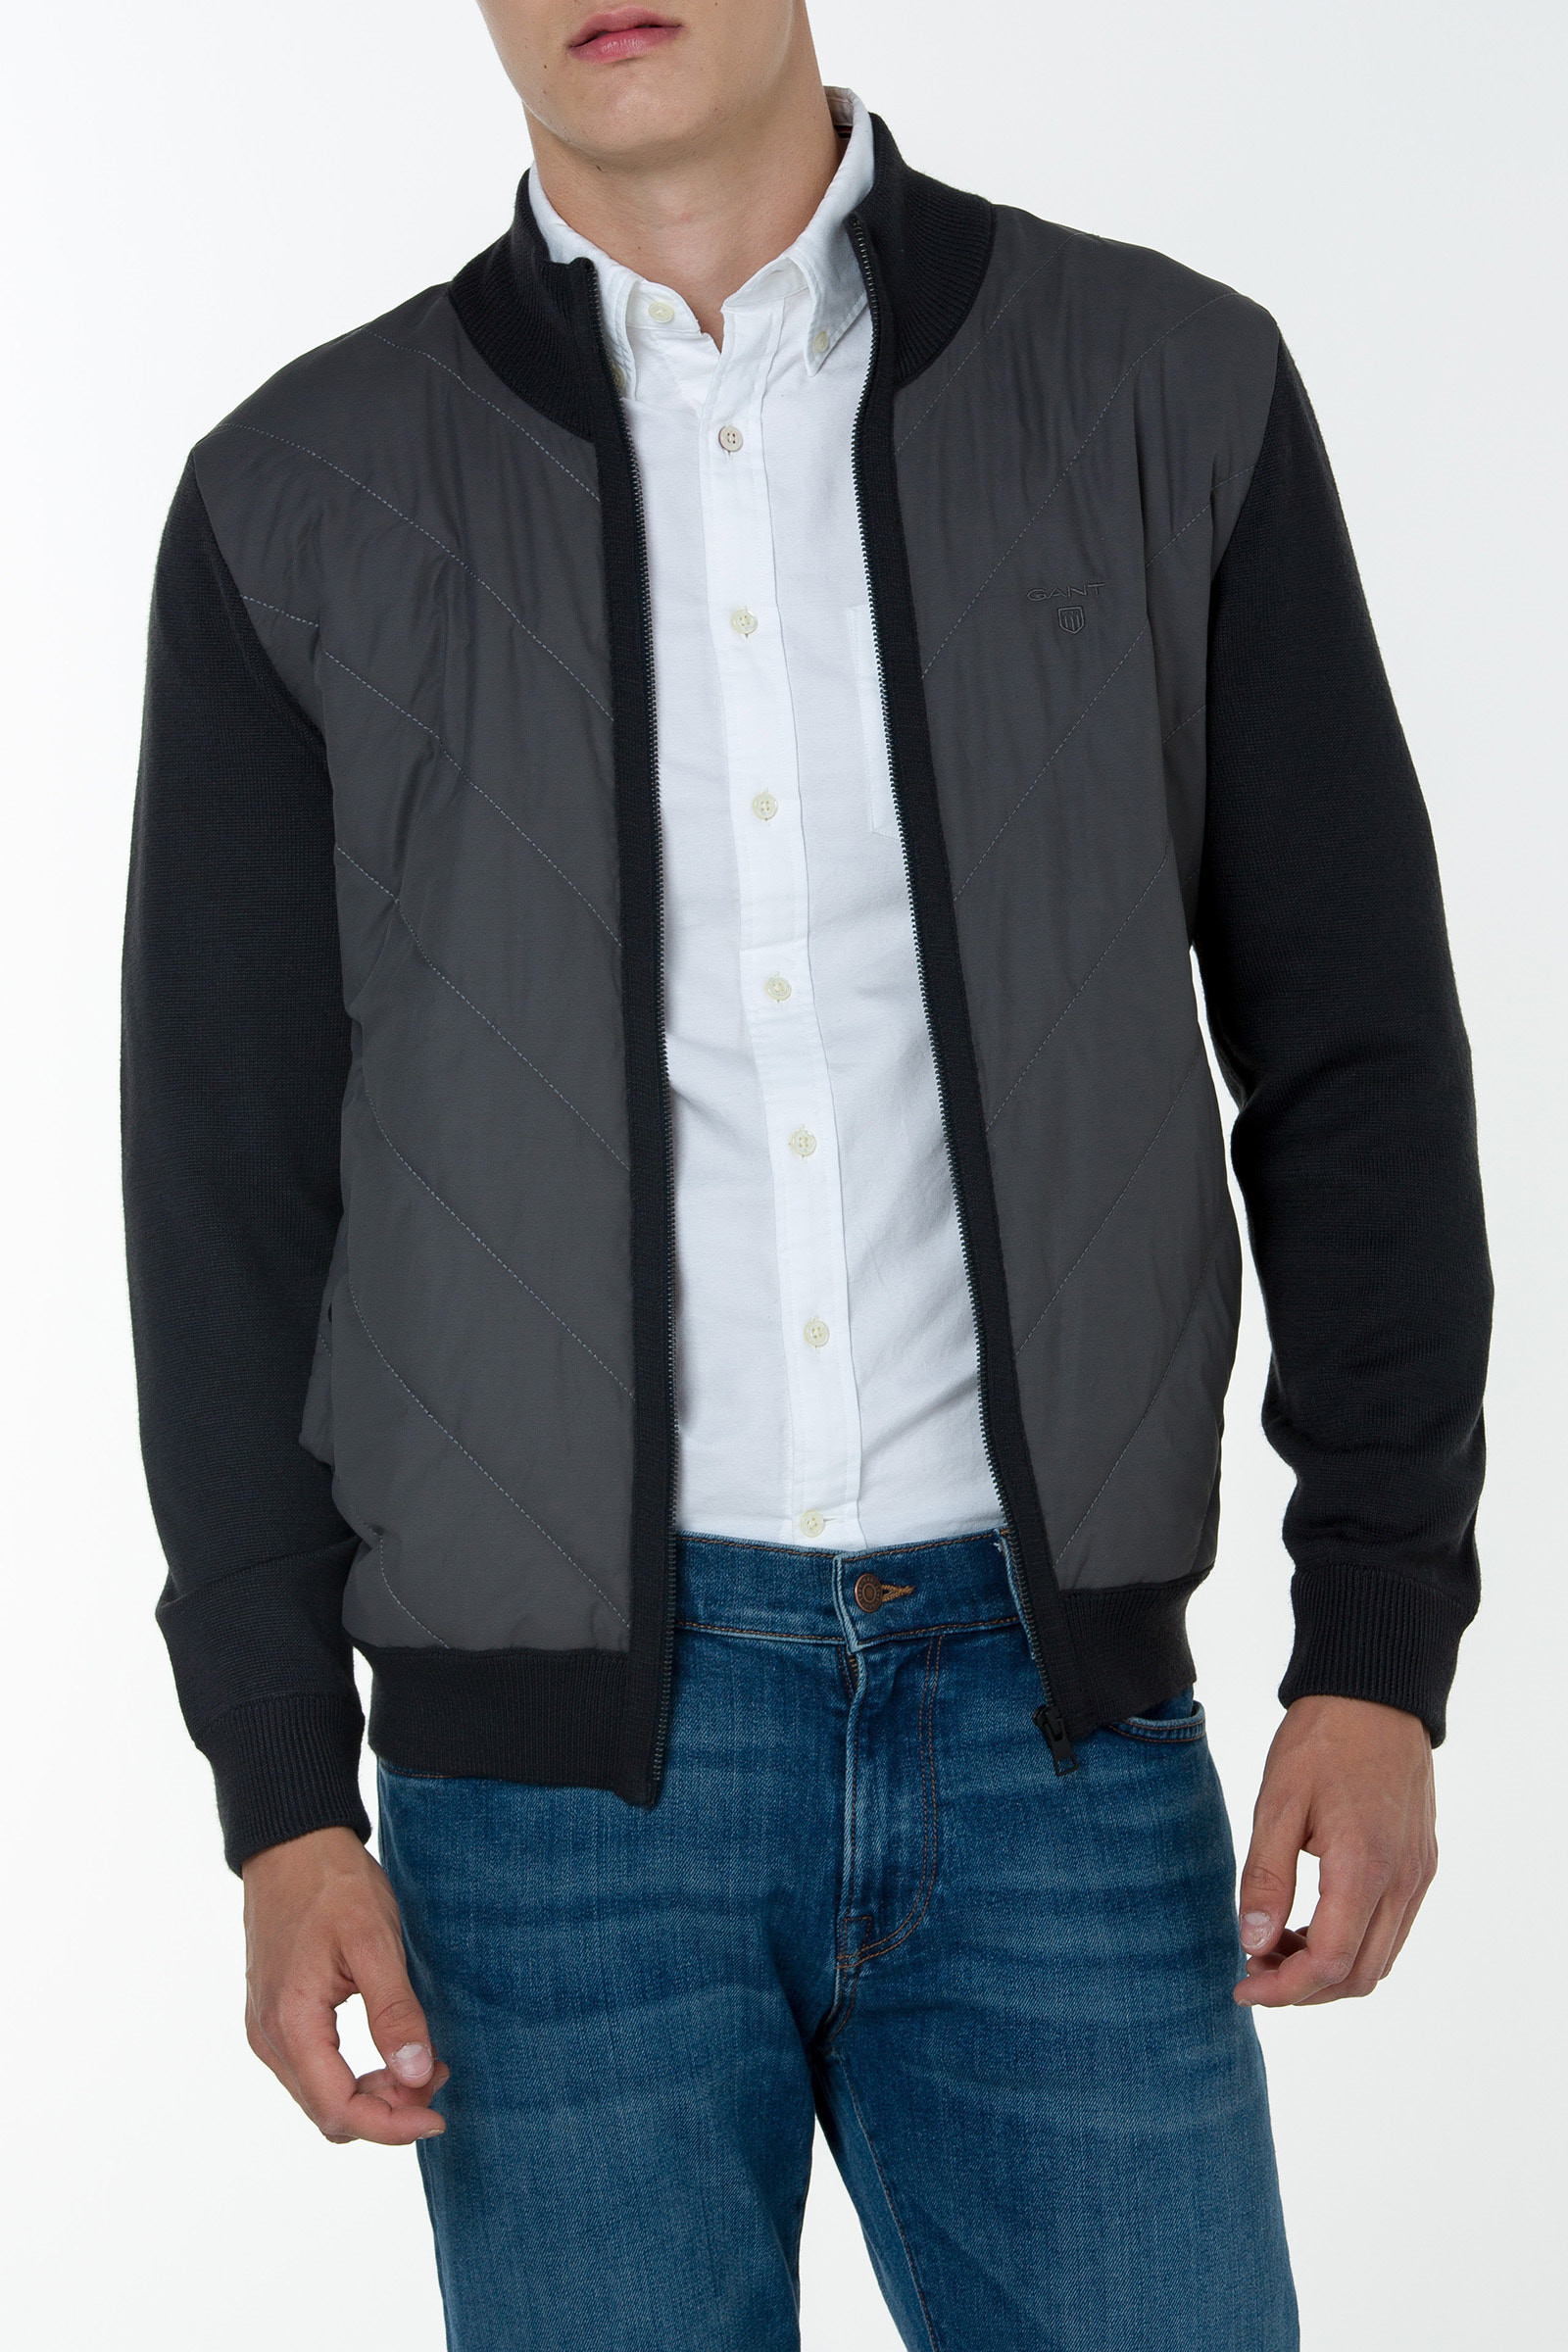 GANT Men's Tech Prep Chevron Quilt Jacket 8040002 Size M $225 NWT | eBay